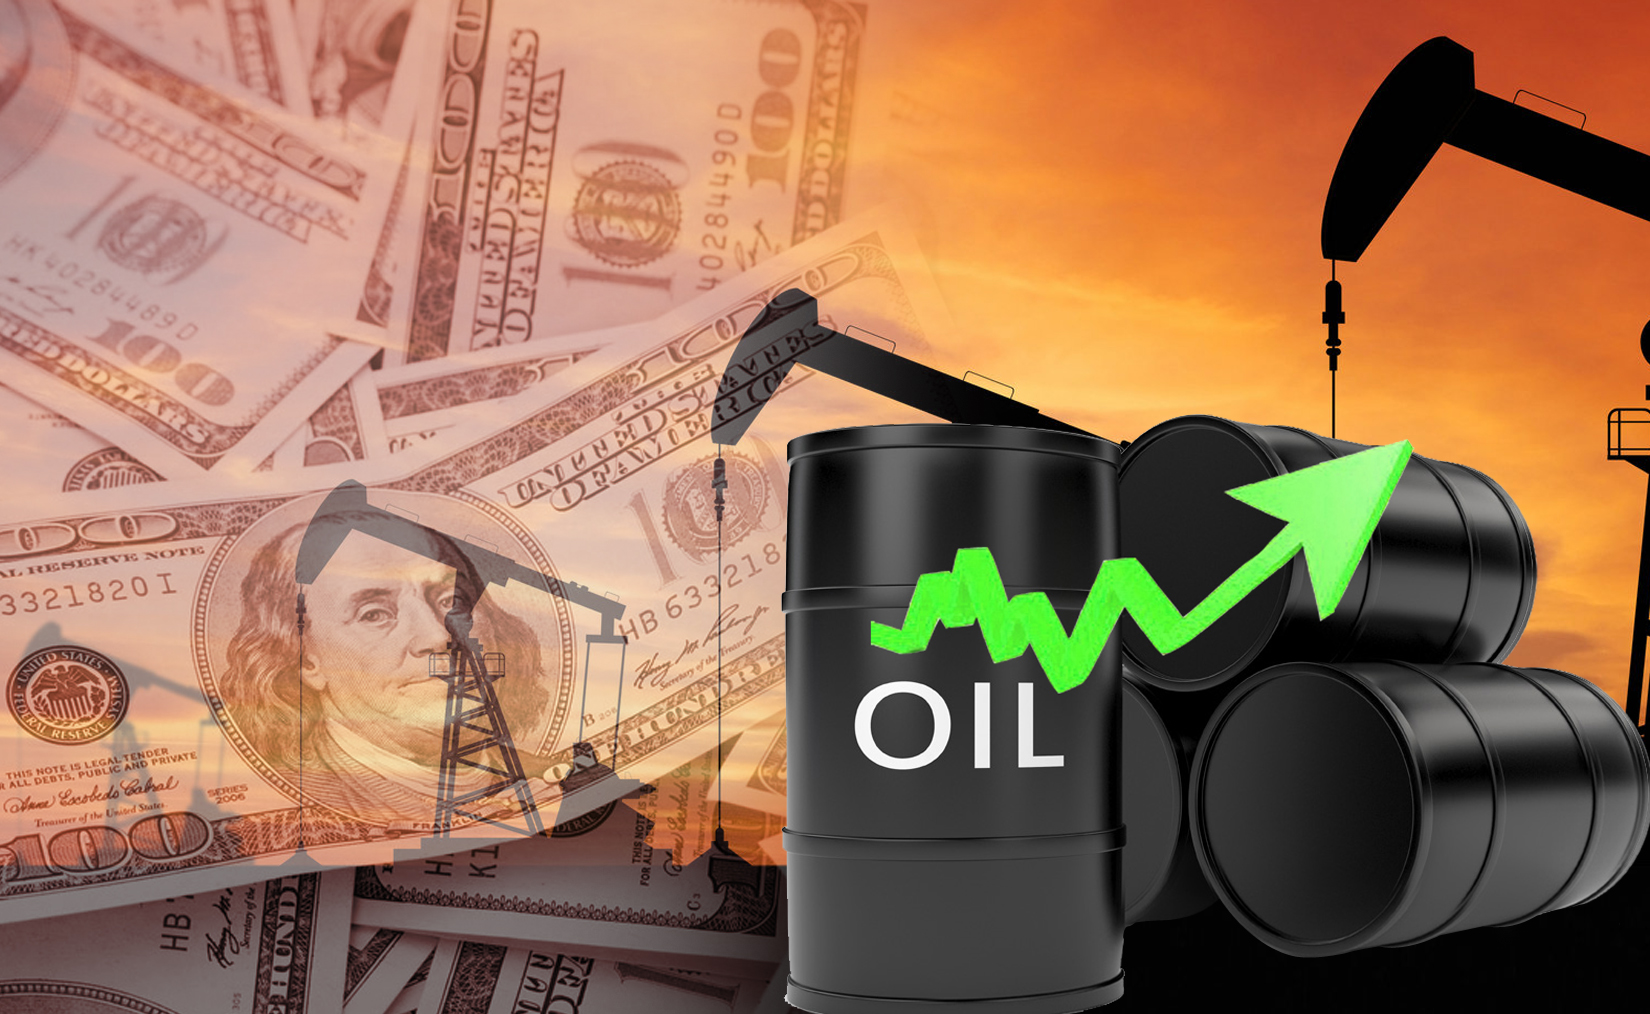 Kuwait oil price to USD USD 35.34 pb, American nears USD 40 pb threshold                                                                                                                                                                                  